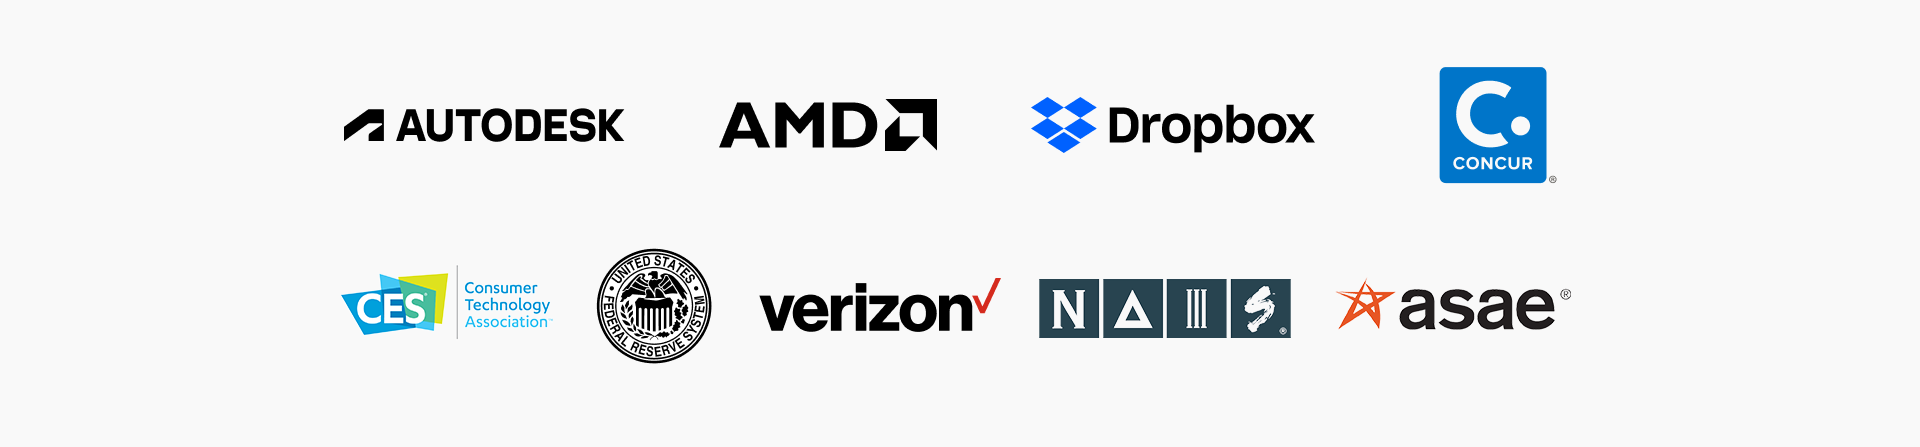 Logo Block - Autodesk, AMD, Dropbox, Concur, Computer technology Association, US Federal Reserve, Verizon, NAIS, asae